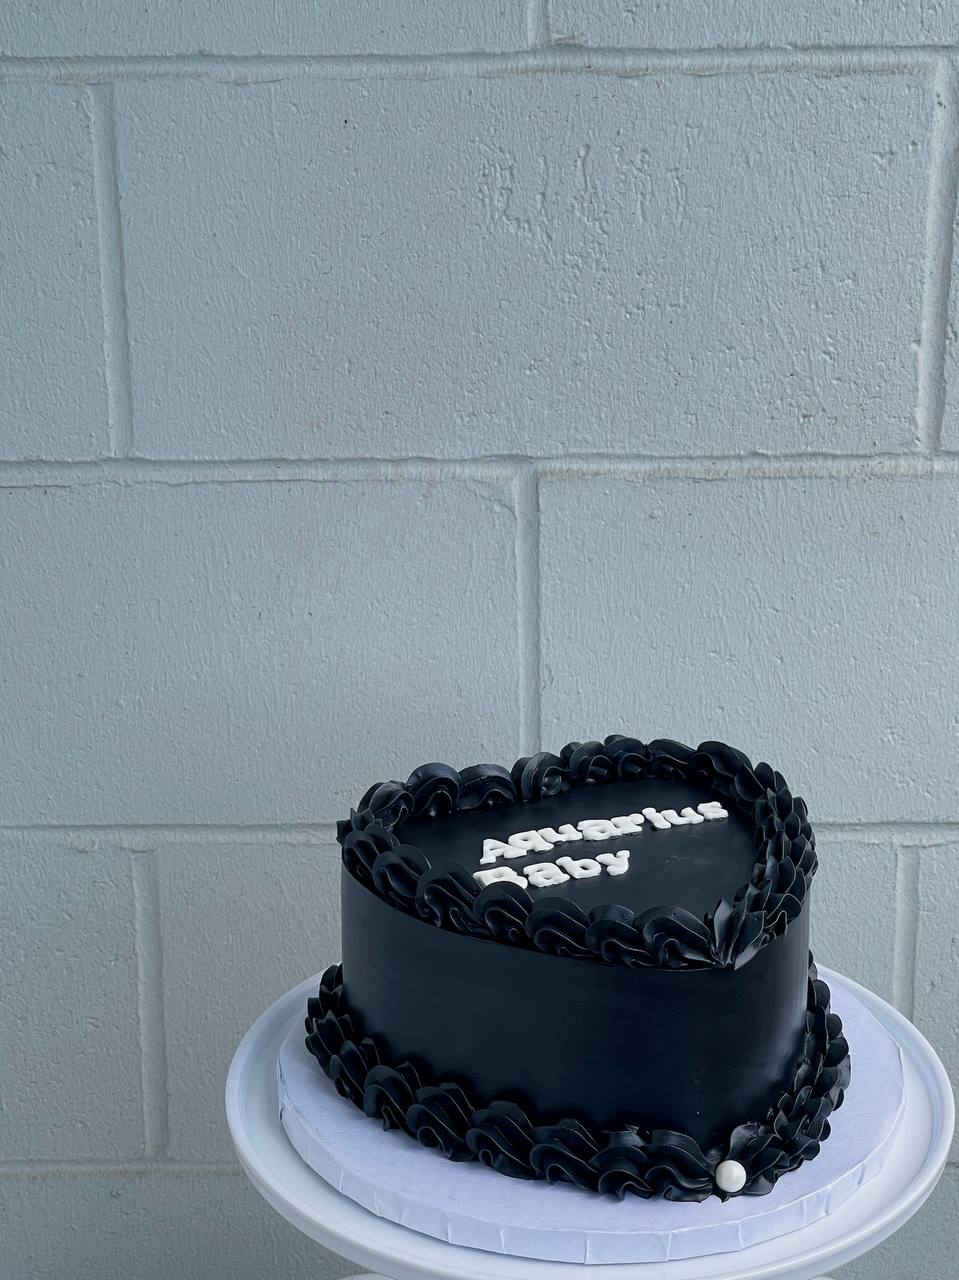 The Dark love cake